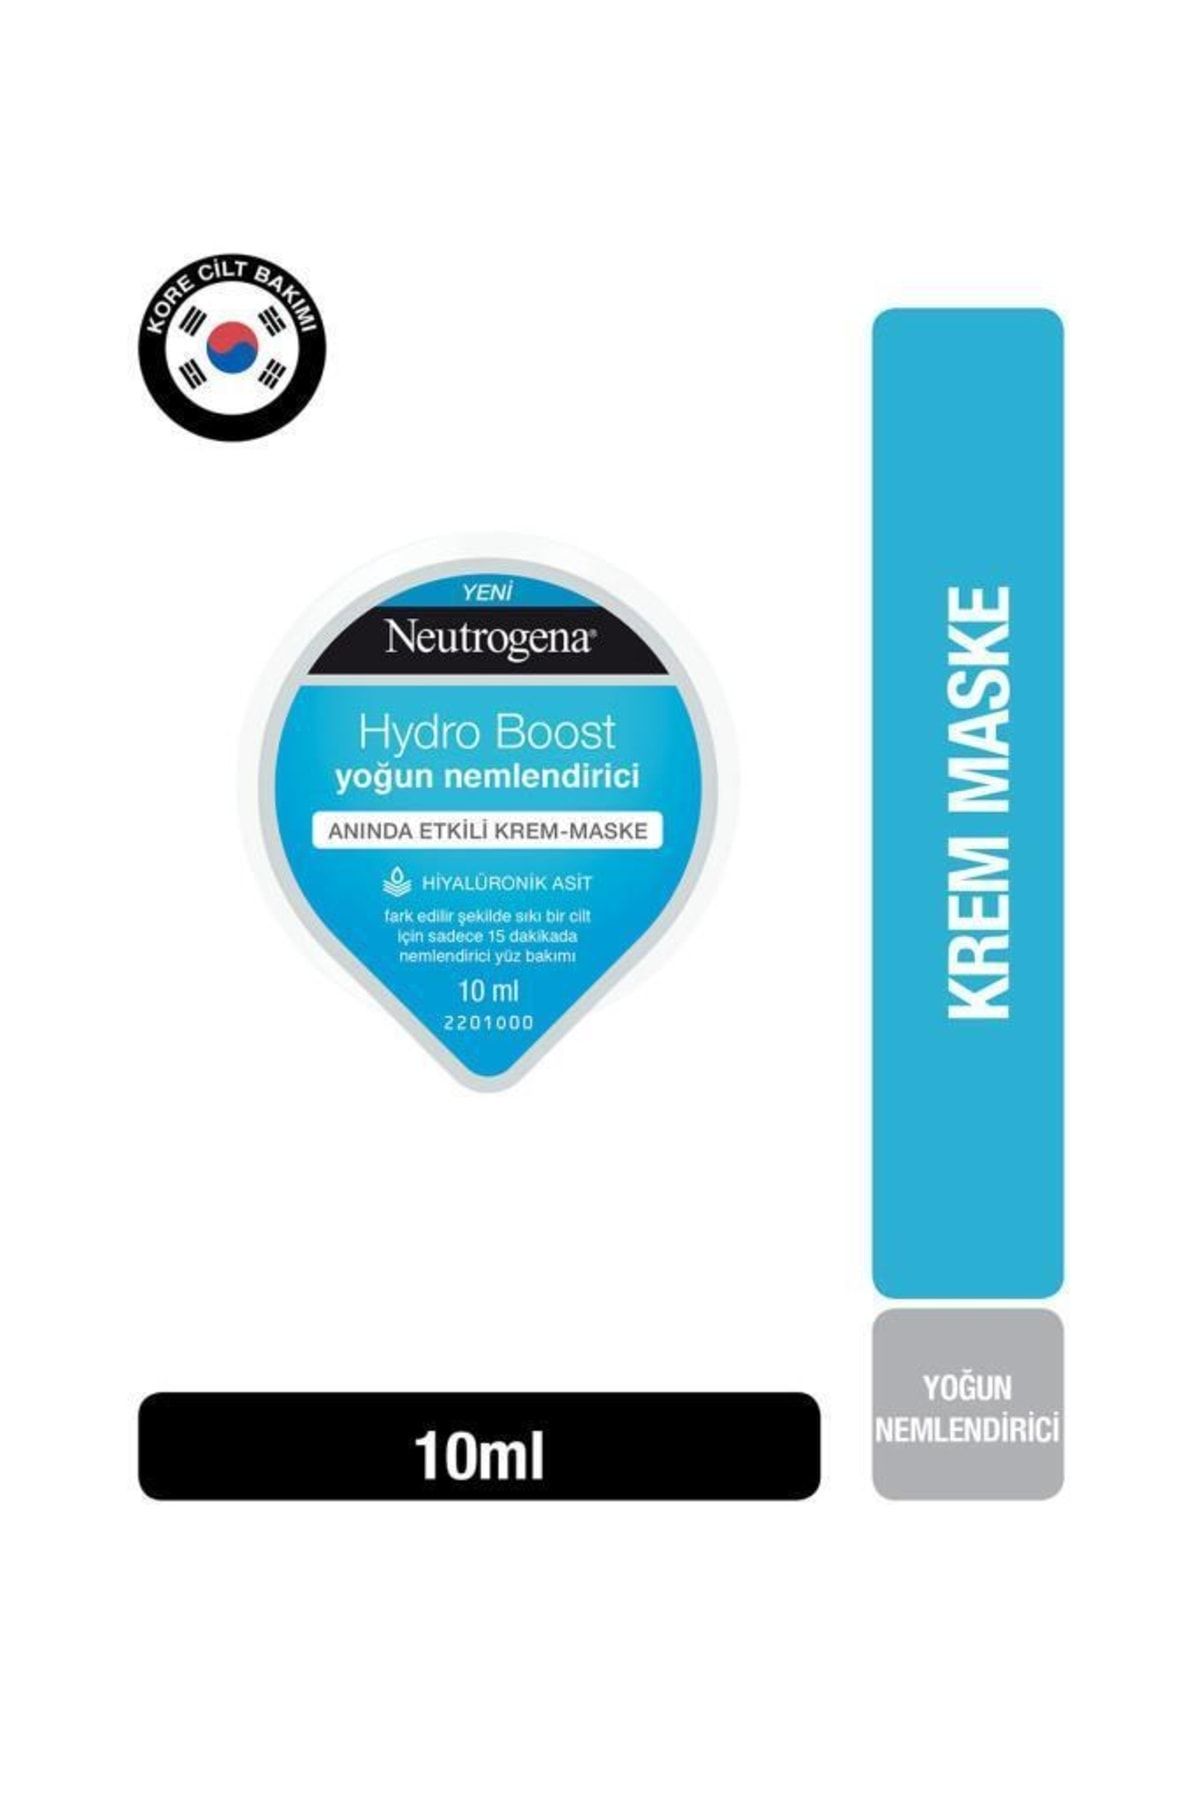 Neutrogena Hydro Boost Krem Maske 10ml